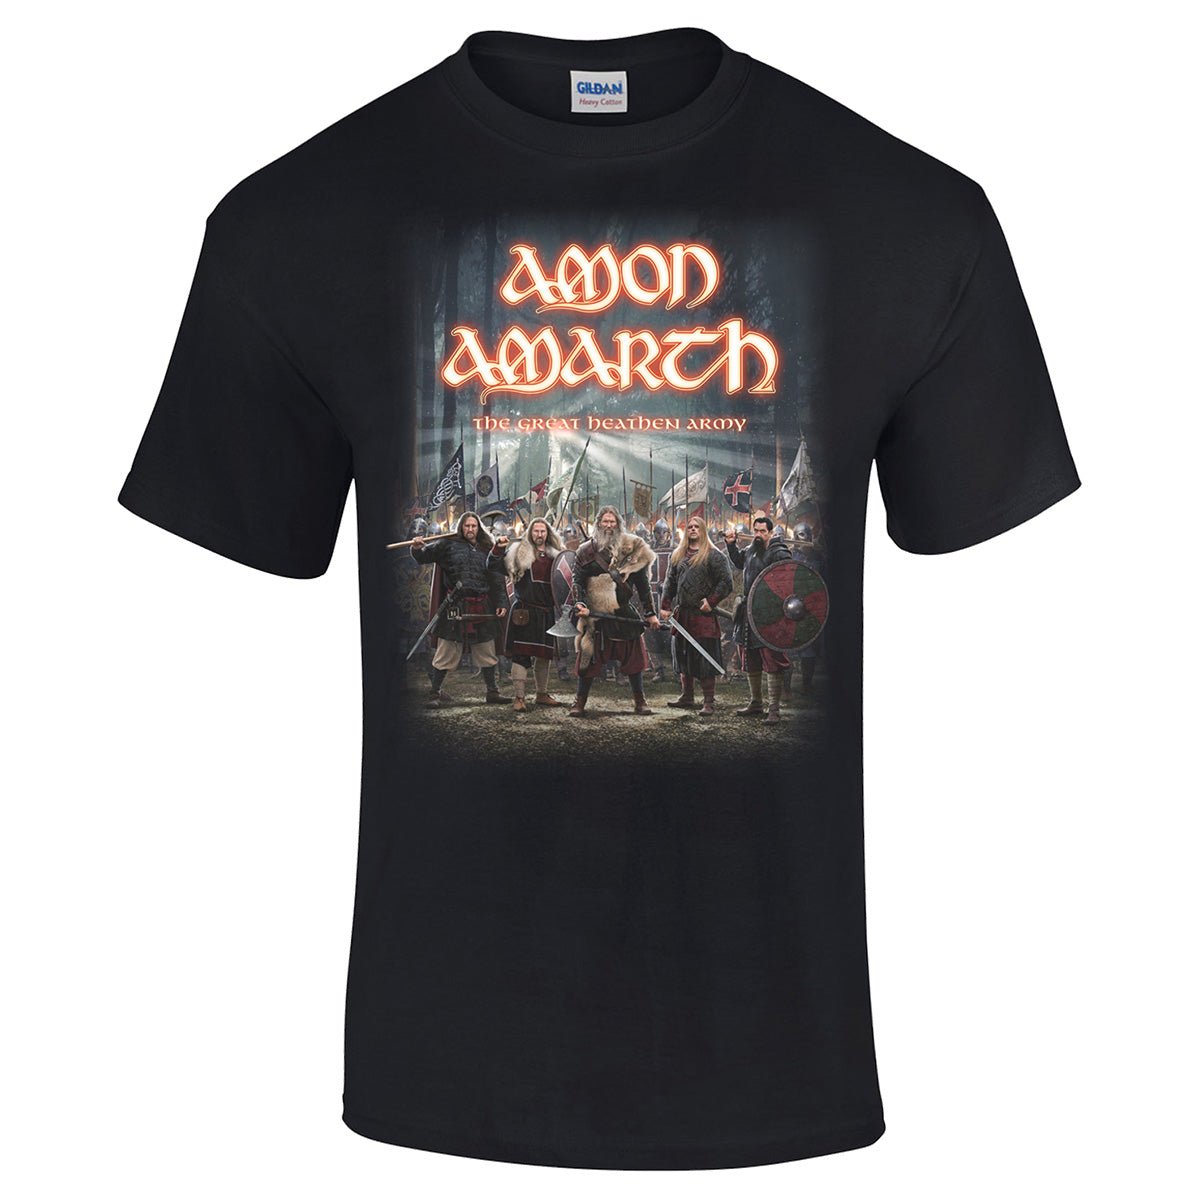 AMON AMARTH The Great Heathen Army Tour 2022 T-Shirt – Amon Amarth US